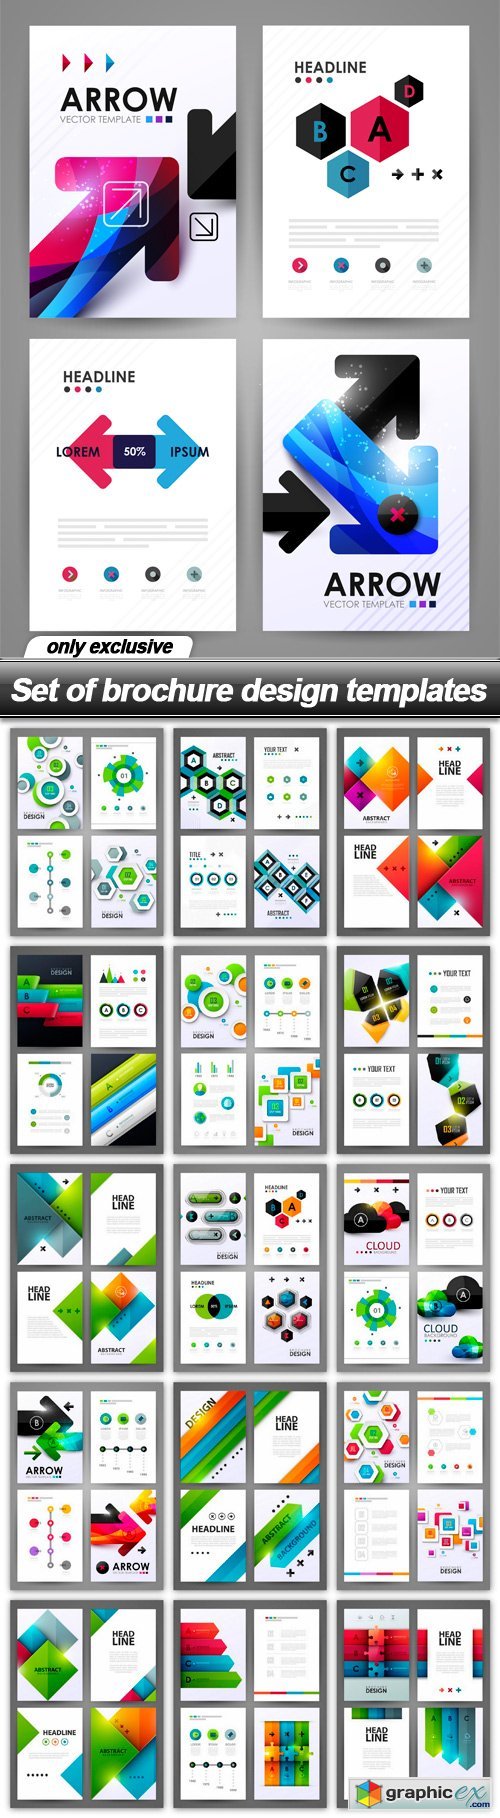 Set of brochure design templates - 16 EPS